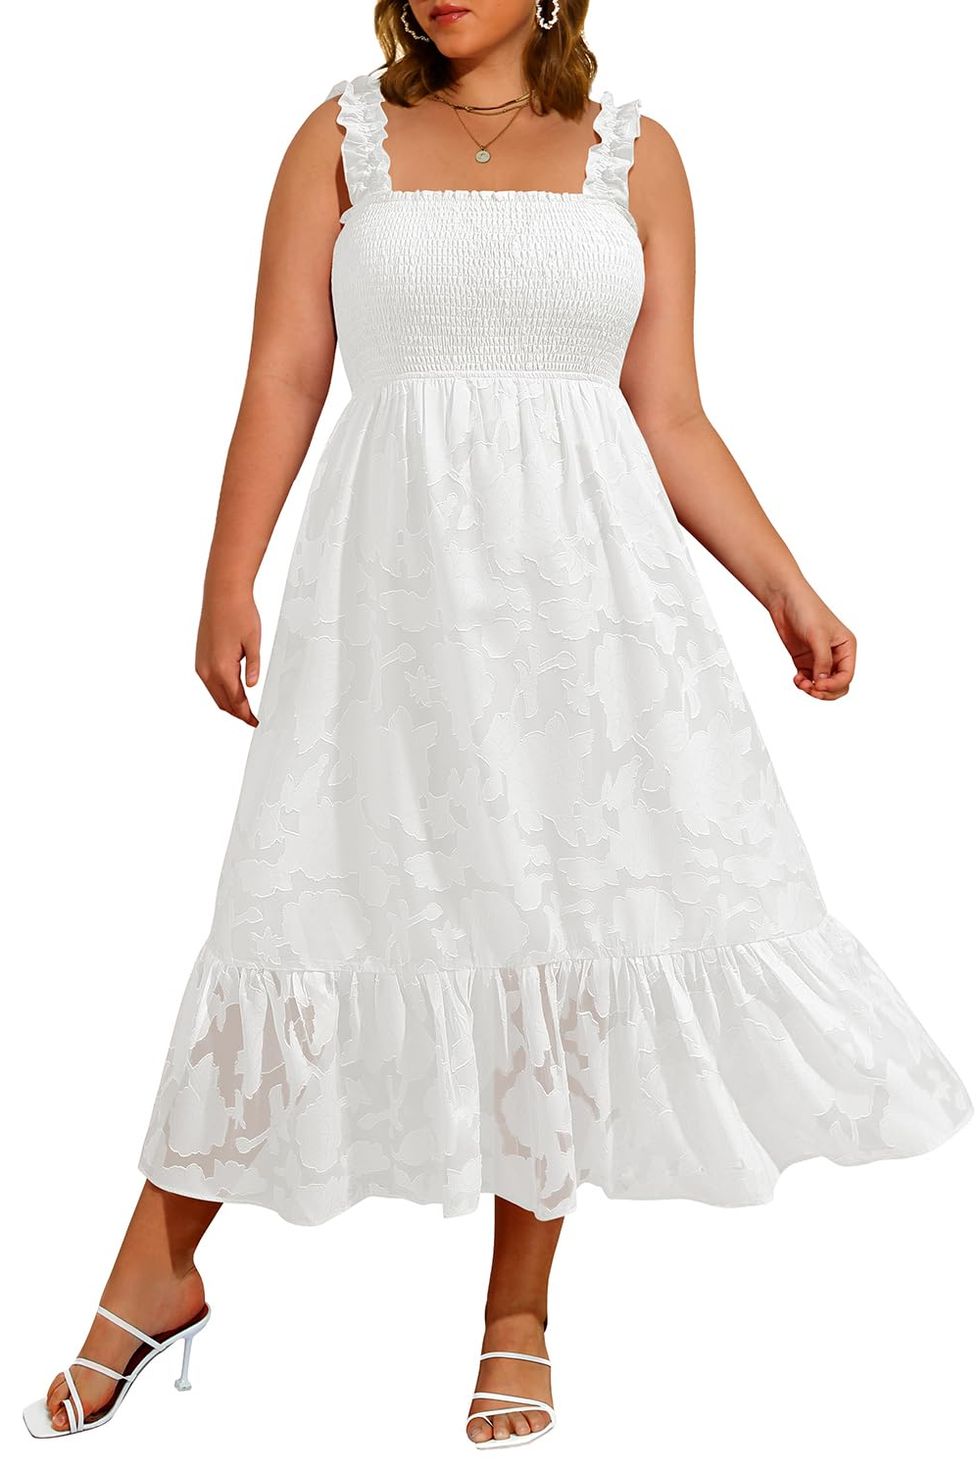 Plus-Size Summer Maxi White Dress